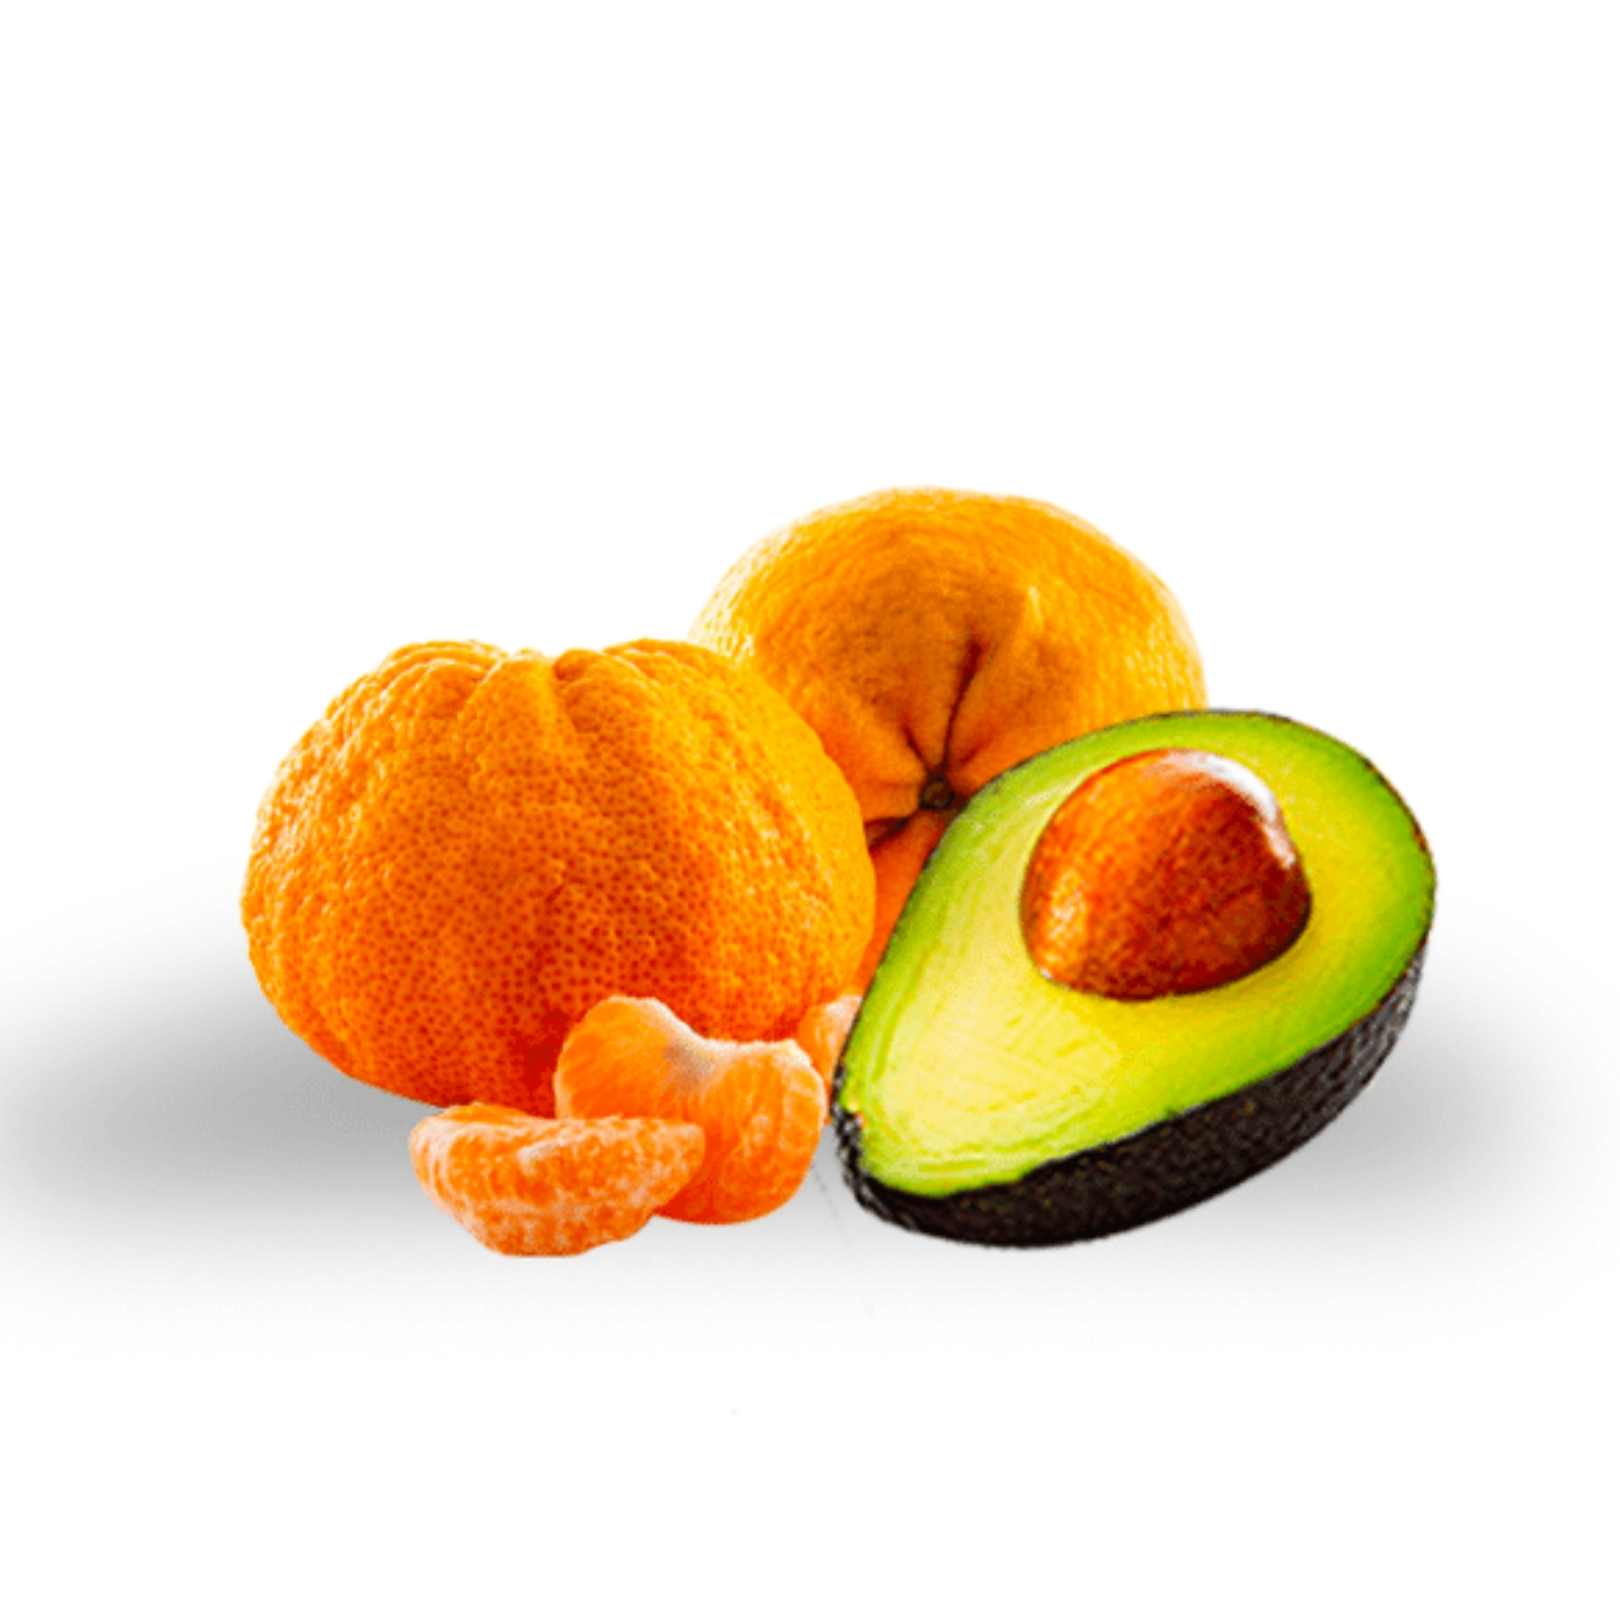 Buy Ugli Fruit Avocado Online NZ